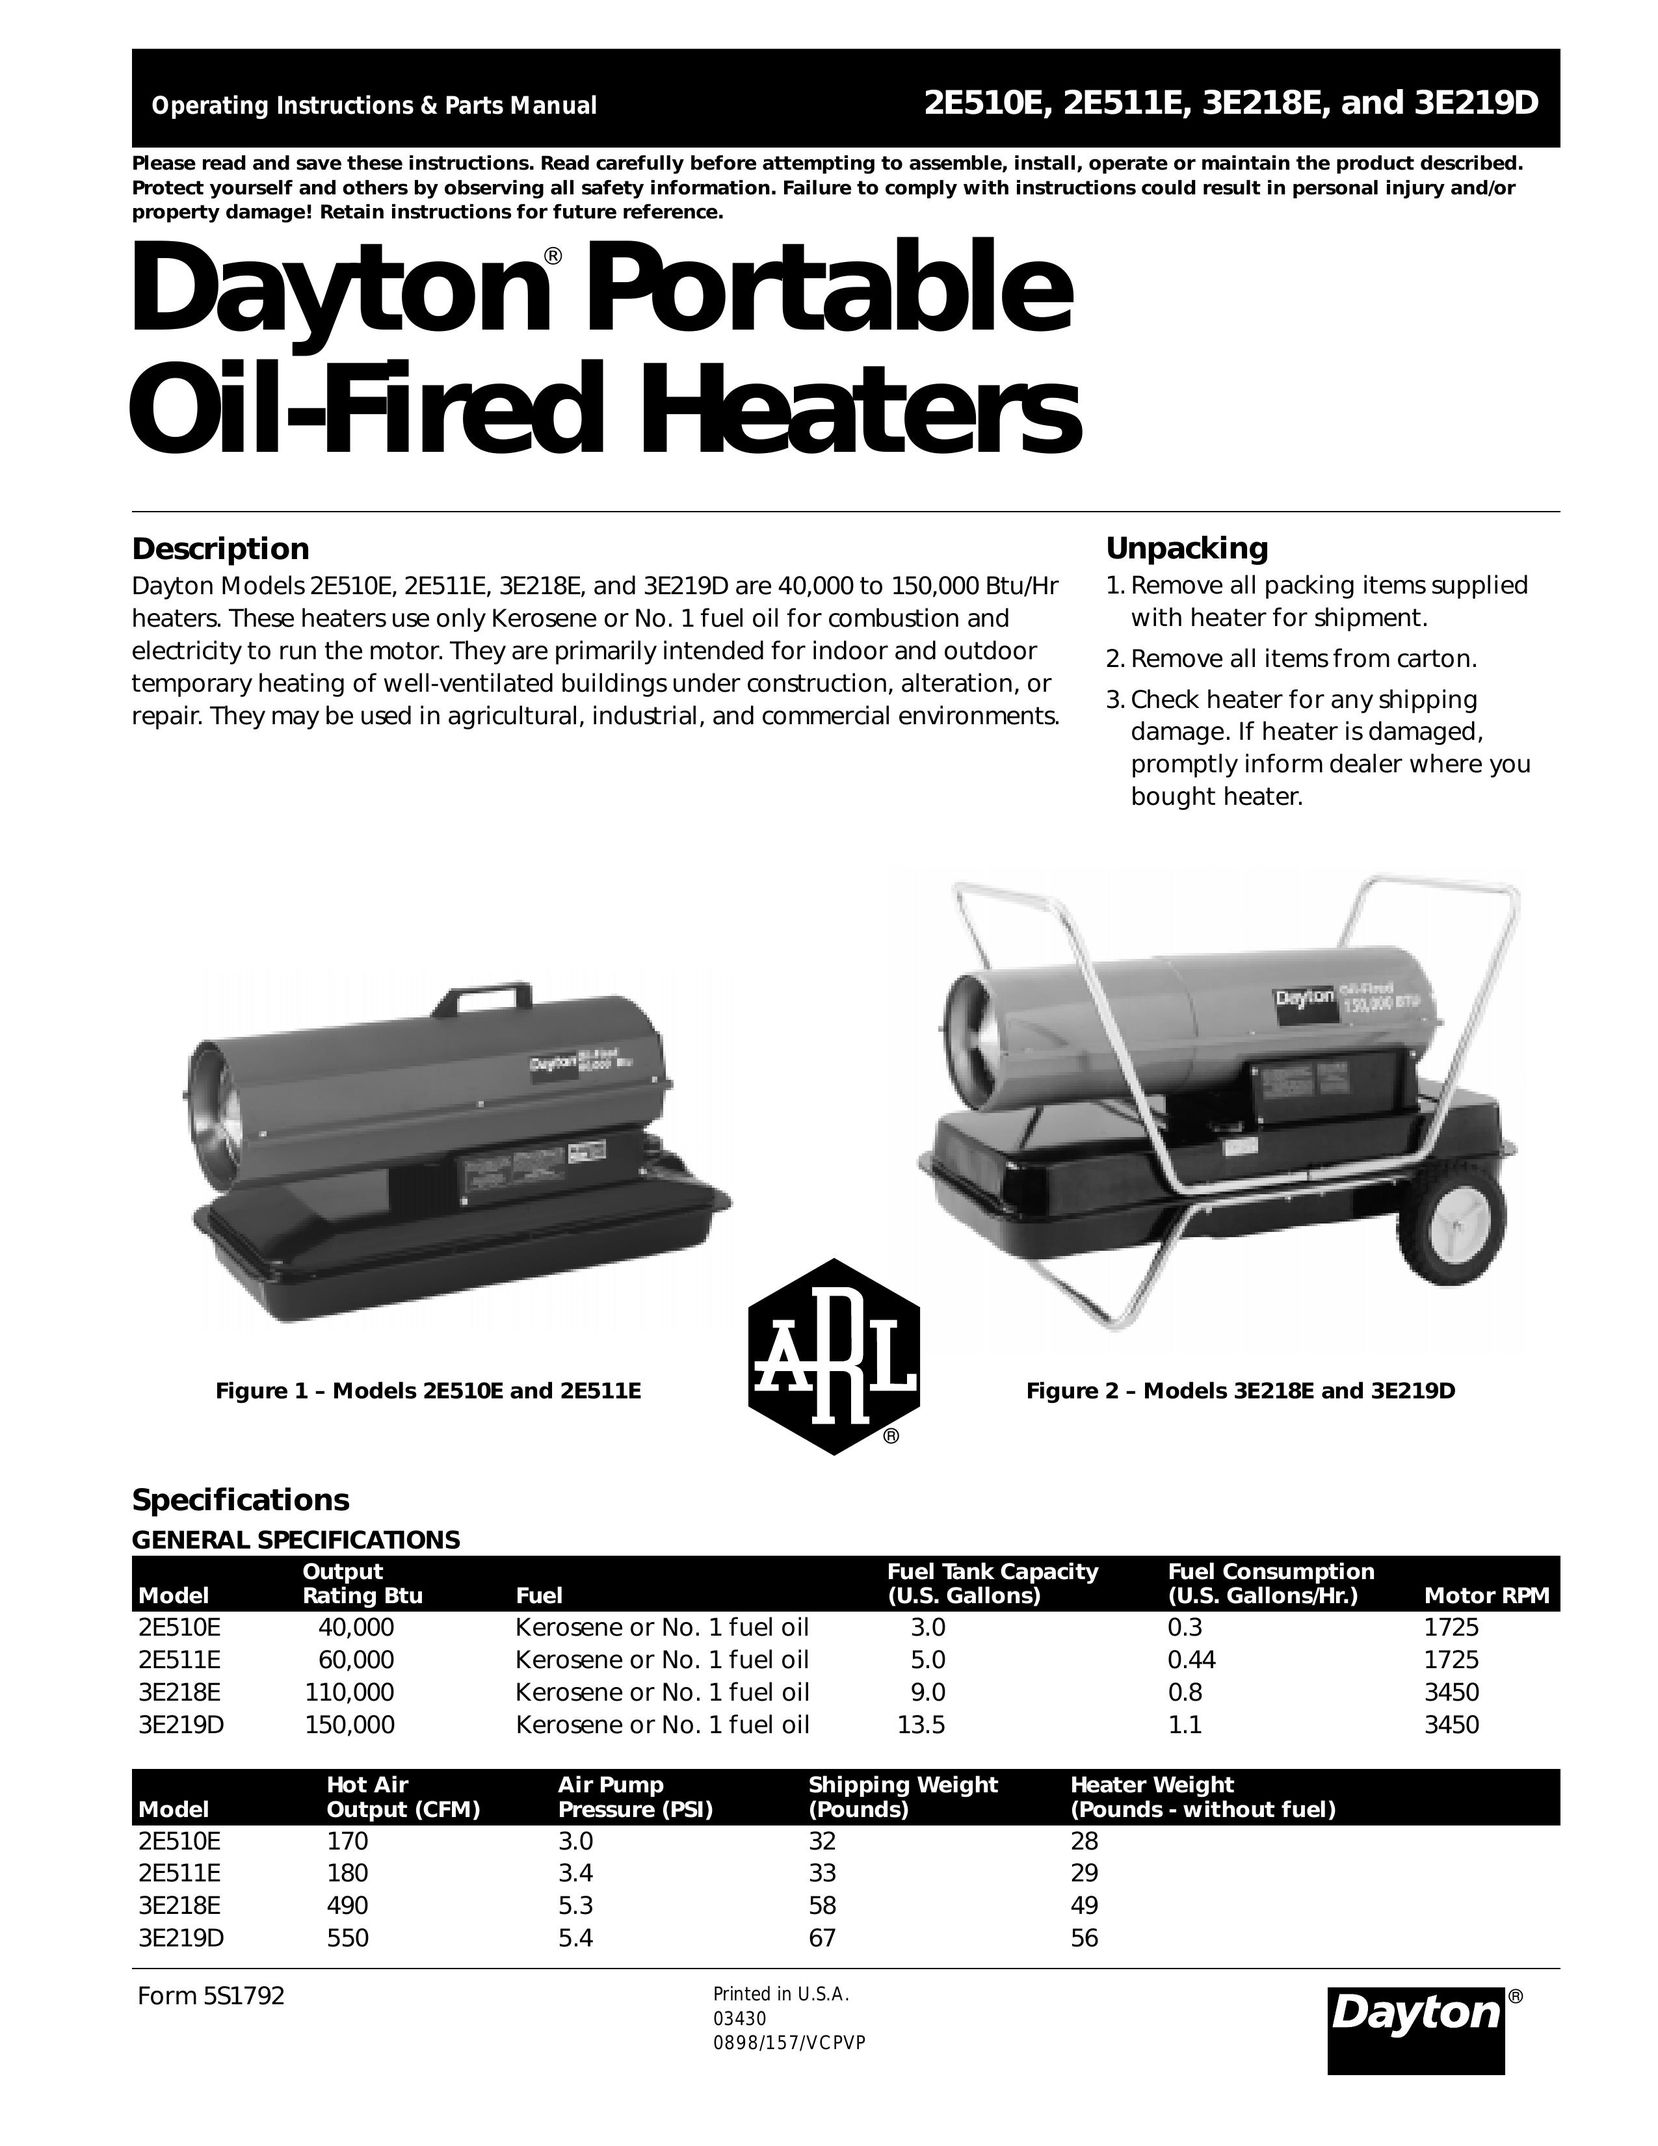 Dayton 2E511E Electric Heater User Manual